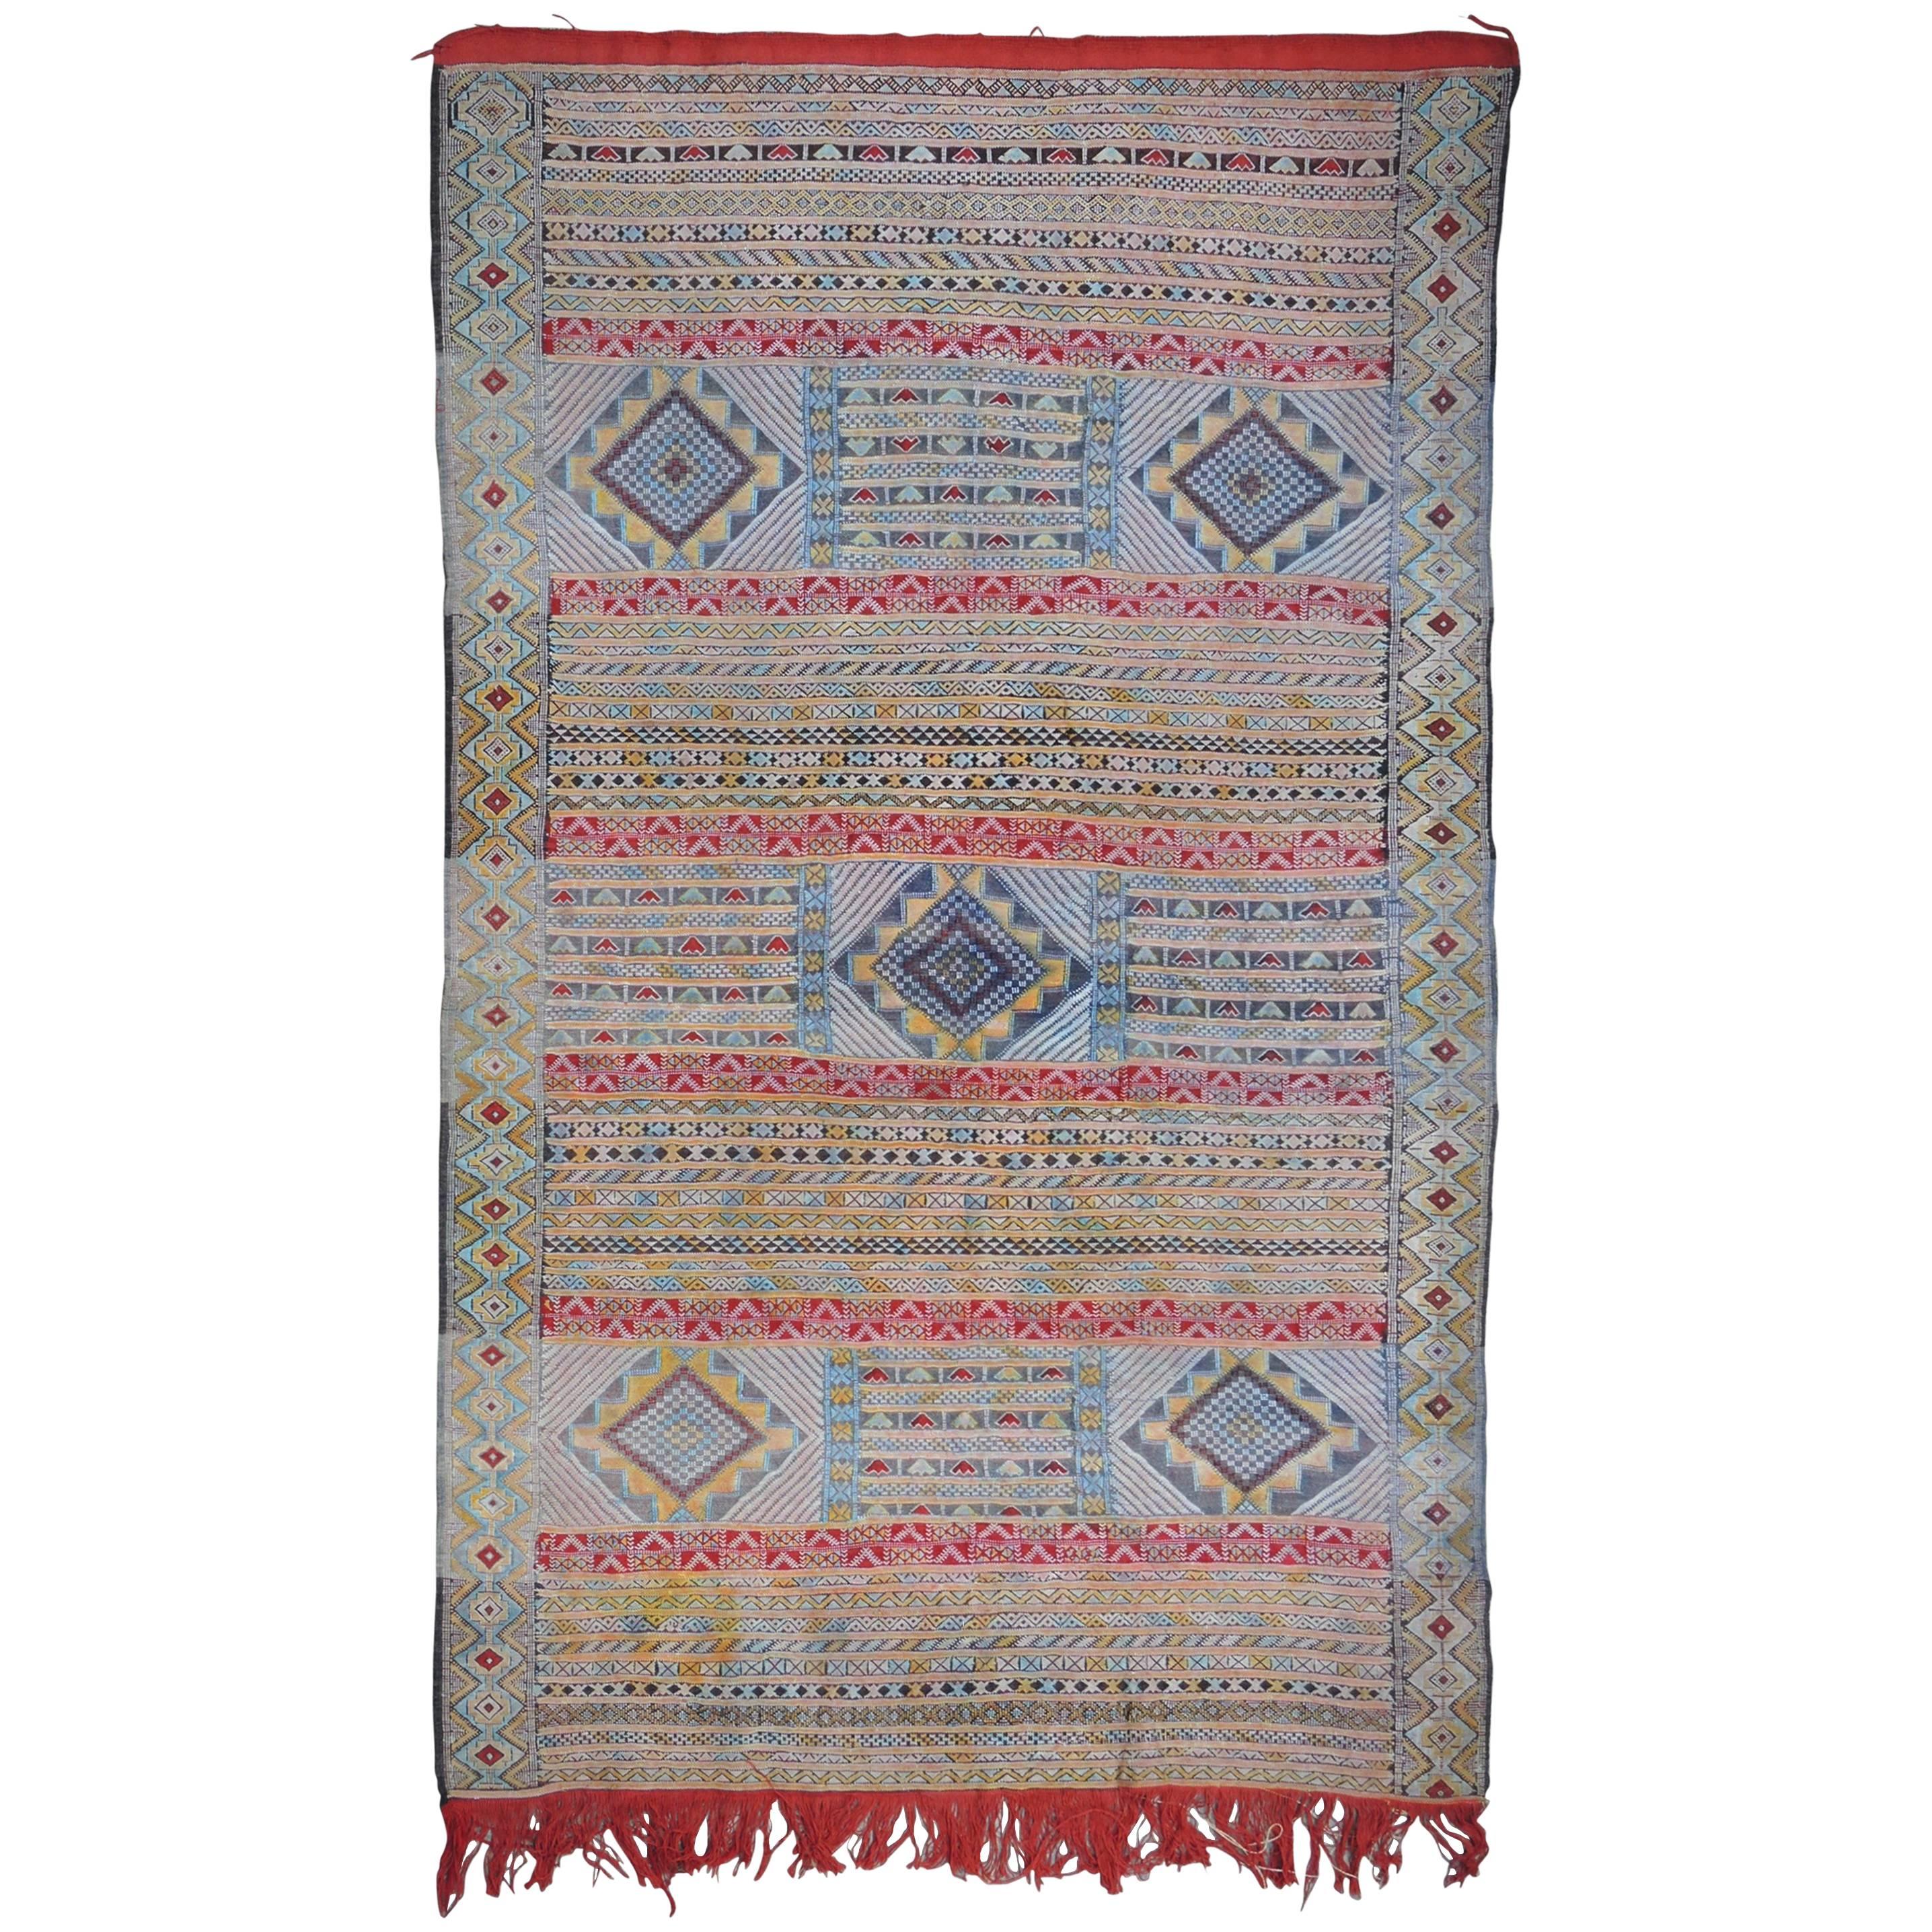 Vintage Moroccan Silk and Wool Flat-Weave Kilim Carpet